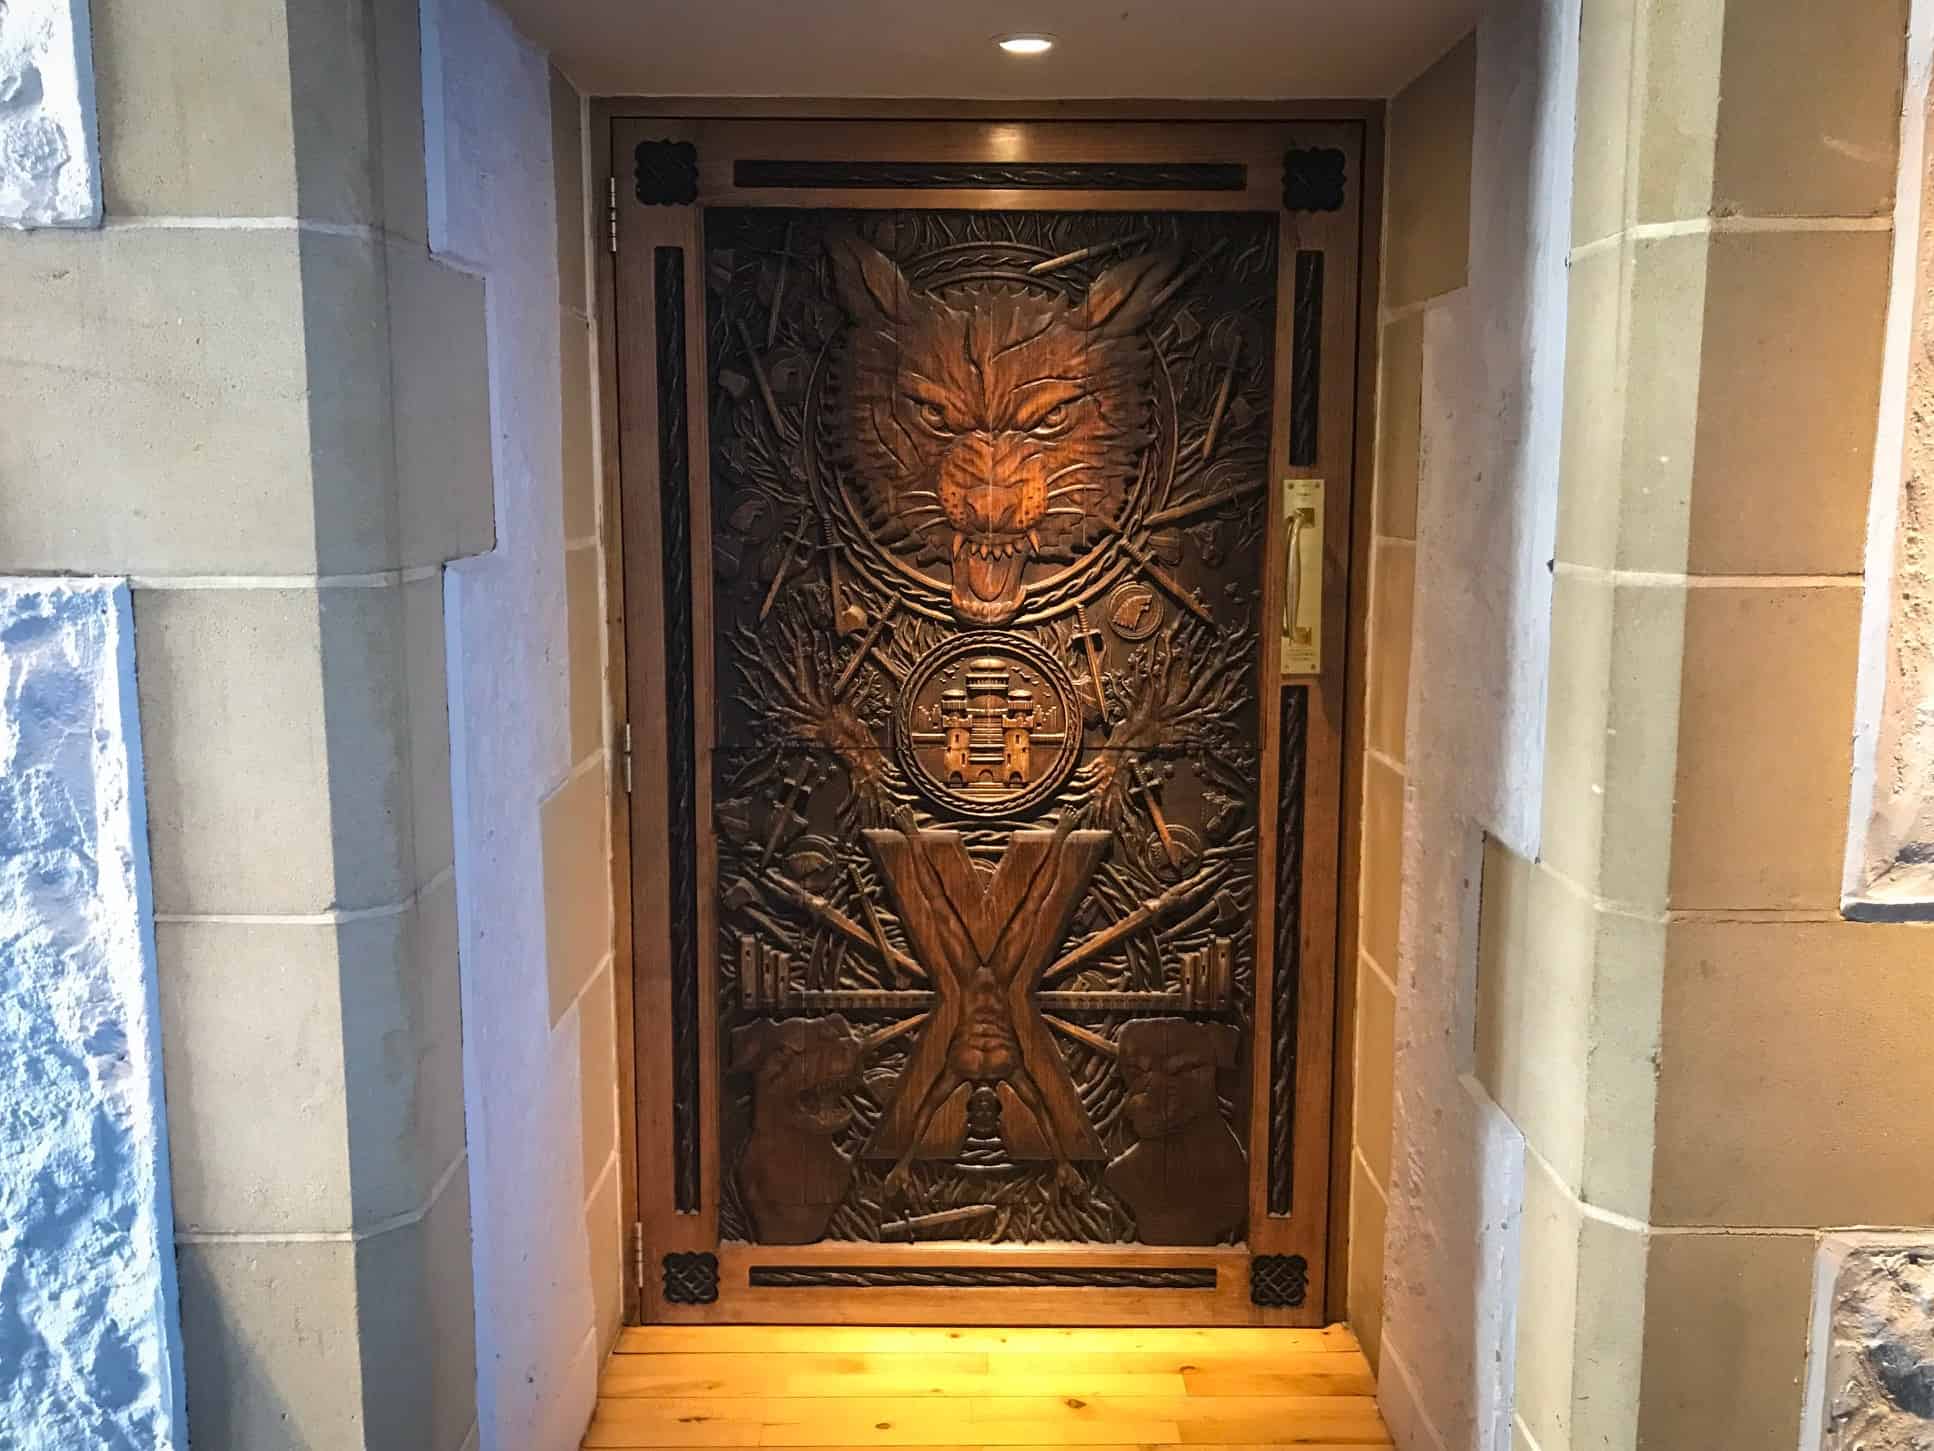 How To Visit The Game Of Thrones Doors In Ireland